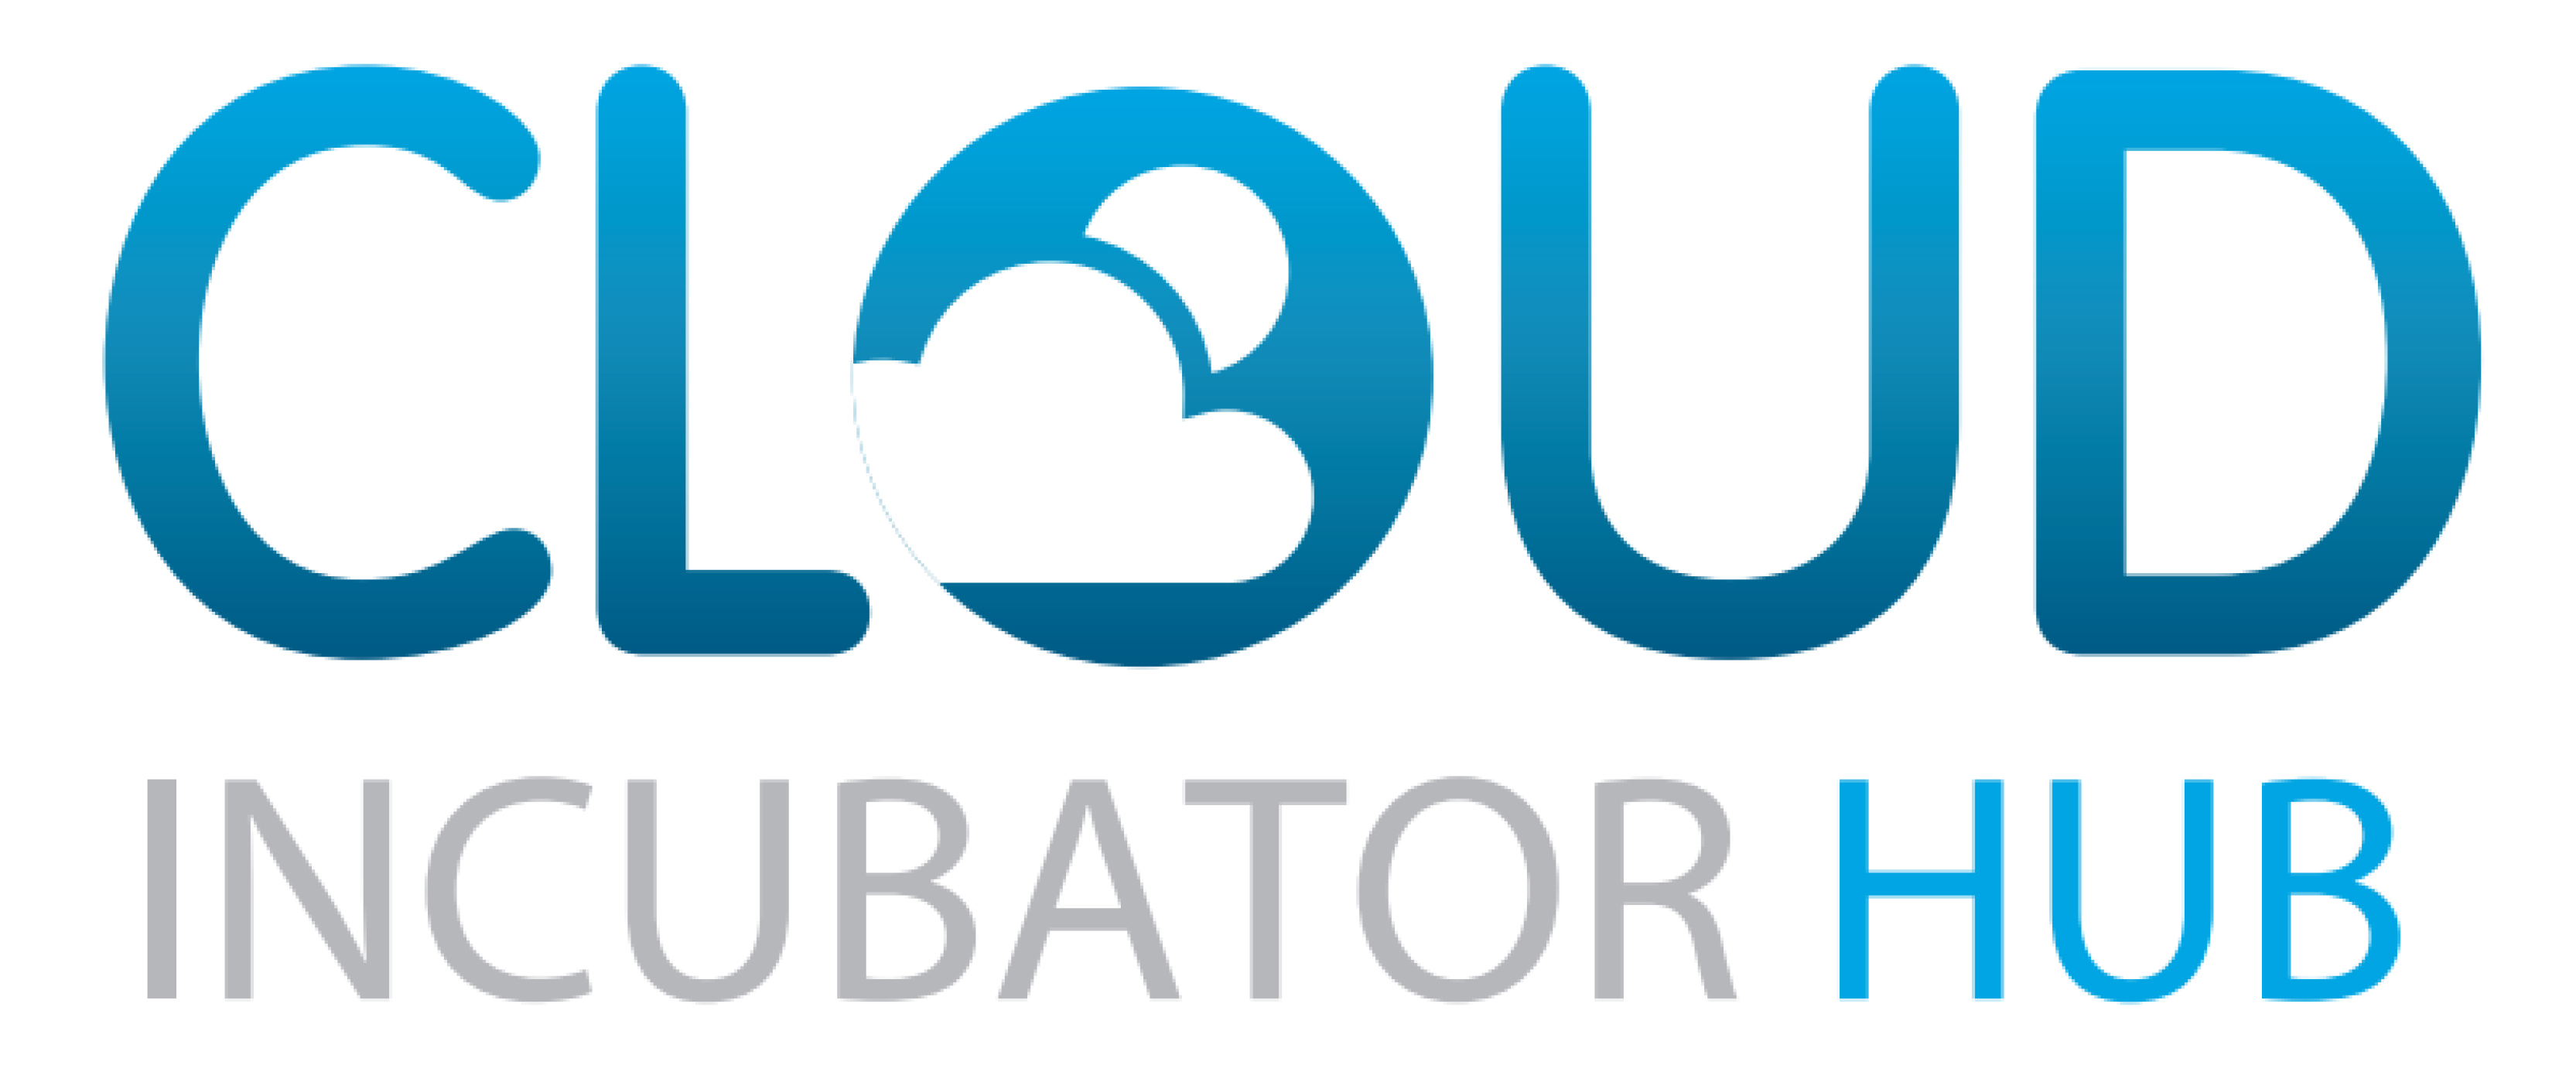 foto: Cloud Incubator HUB